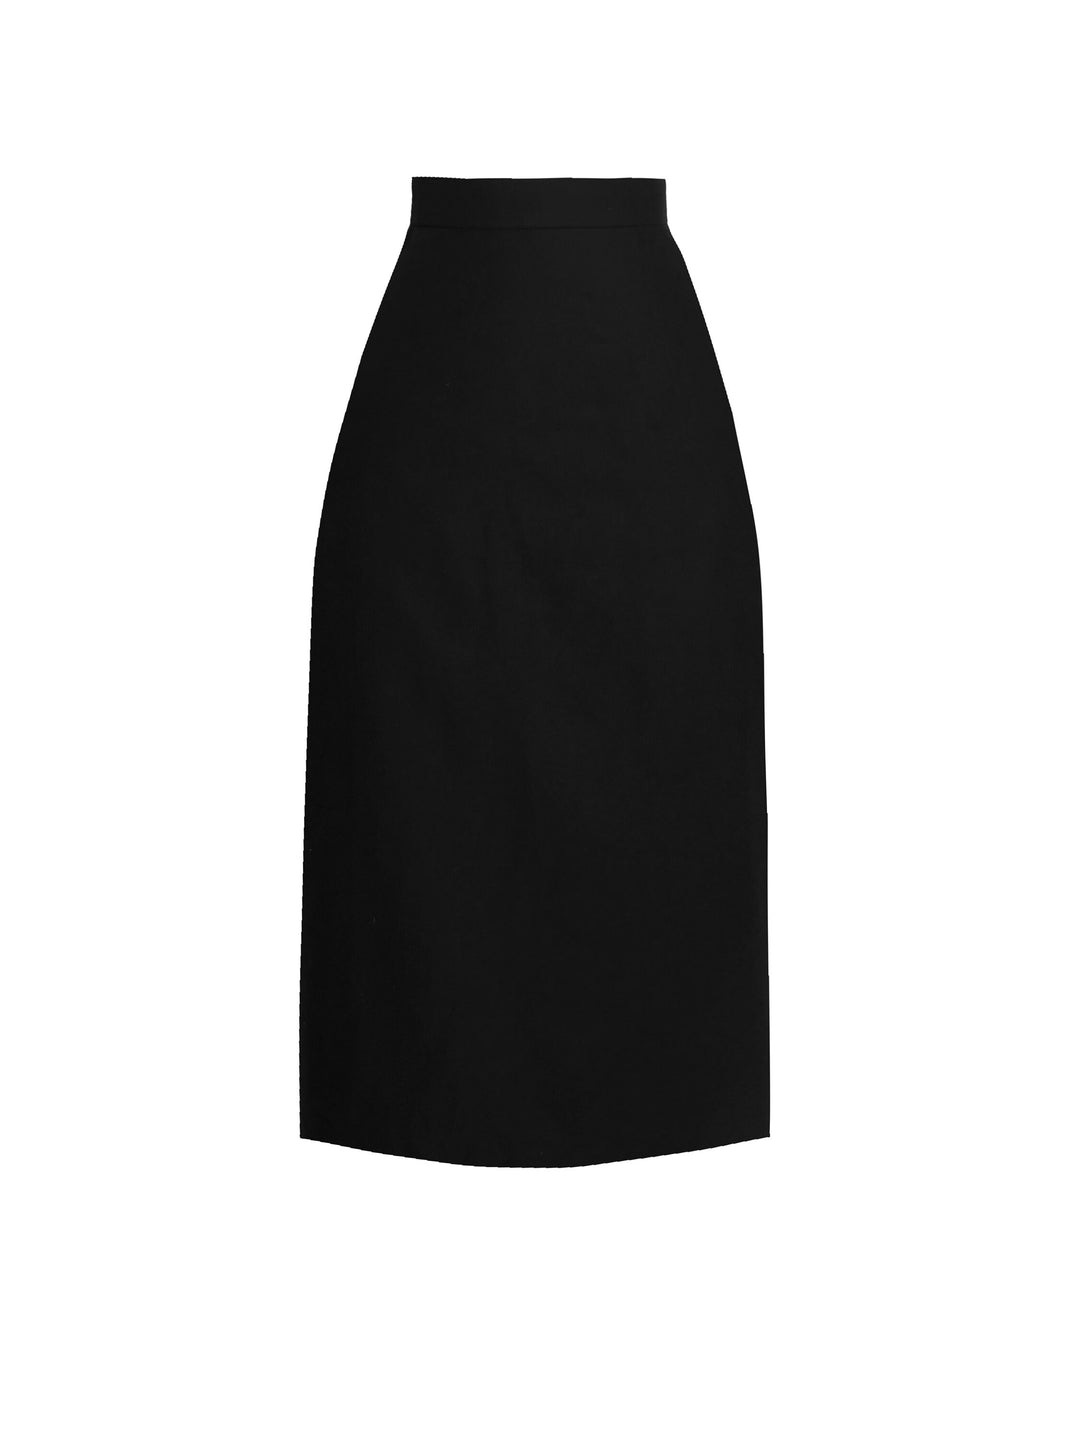 RTS - Size S - Draper Skirt in Raven Black Cotton